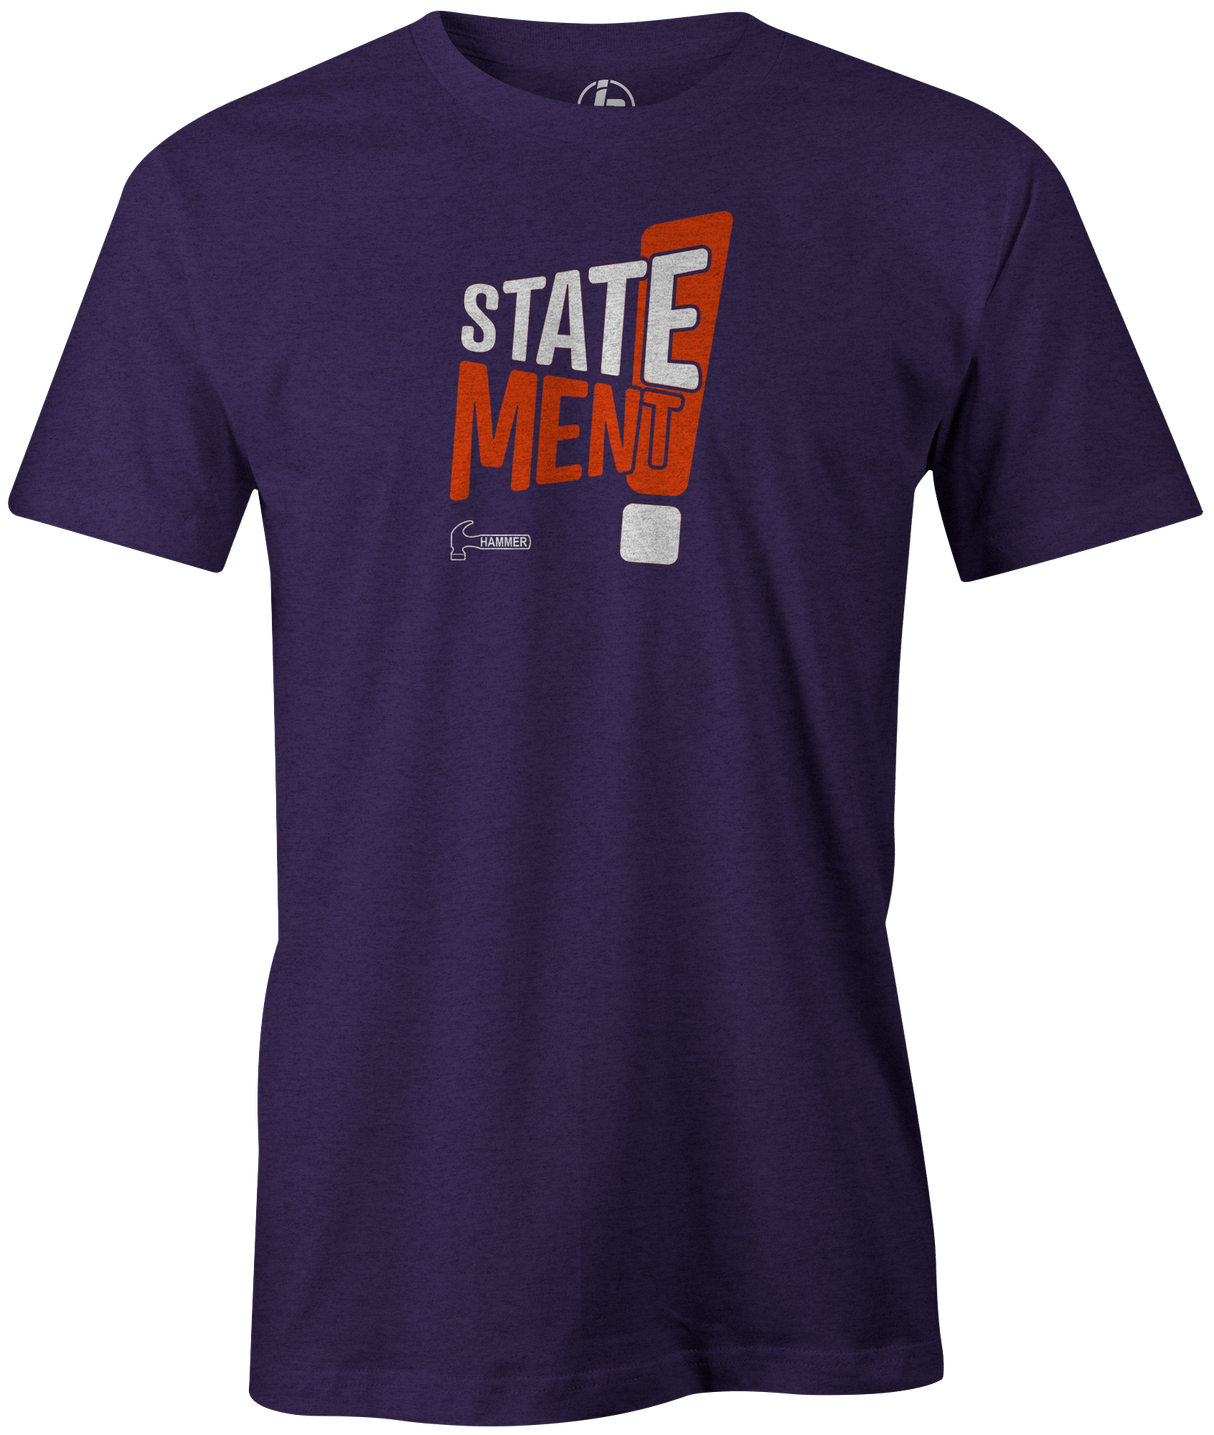 Statement Men's T-shirt, Purple, bowling, statement pearl, statement hybrid, statement solid, bowling ball, logo, cool, hammer, hammer bowling, tshirt, tee, tee-shirt, tee shirt.